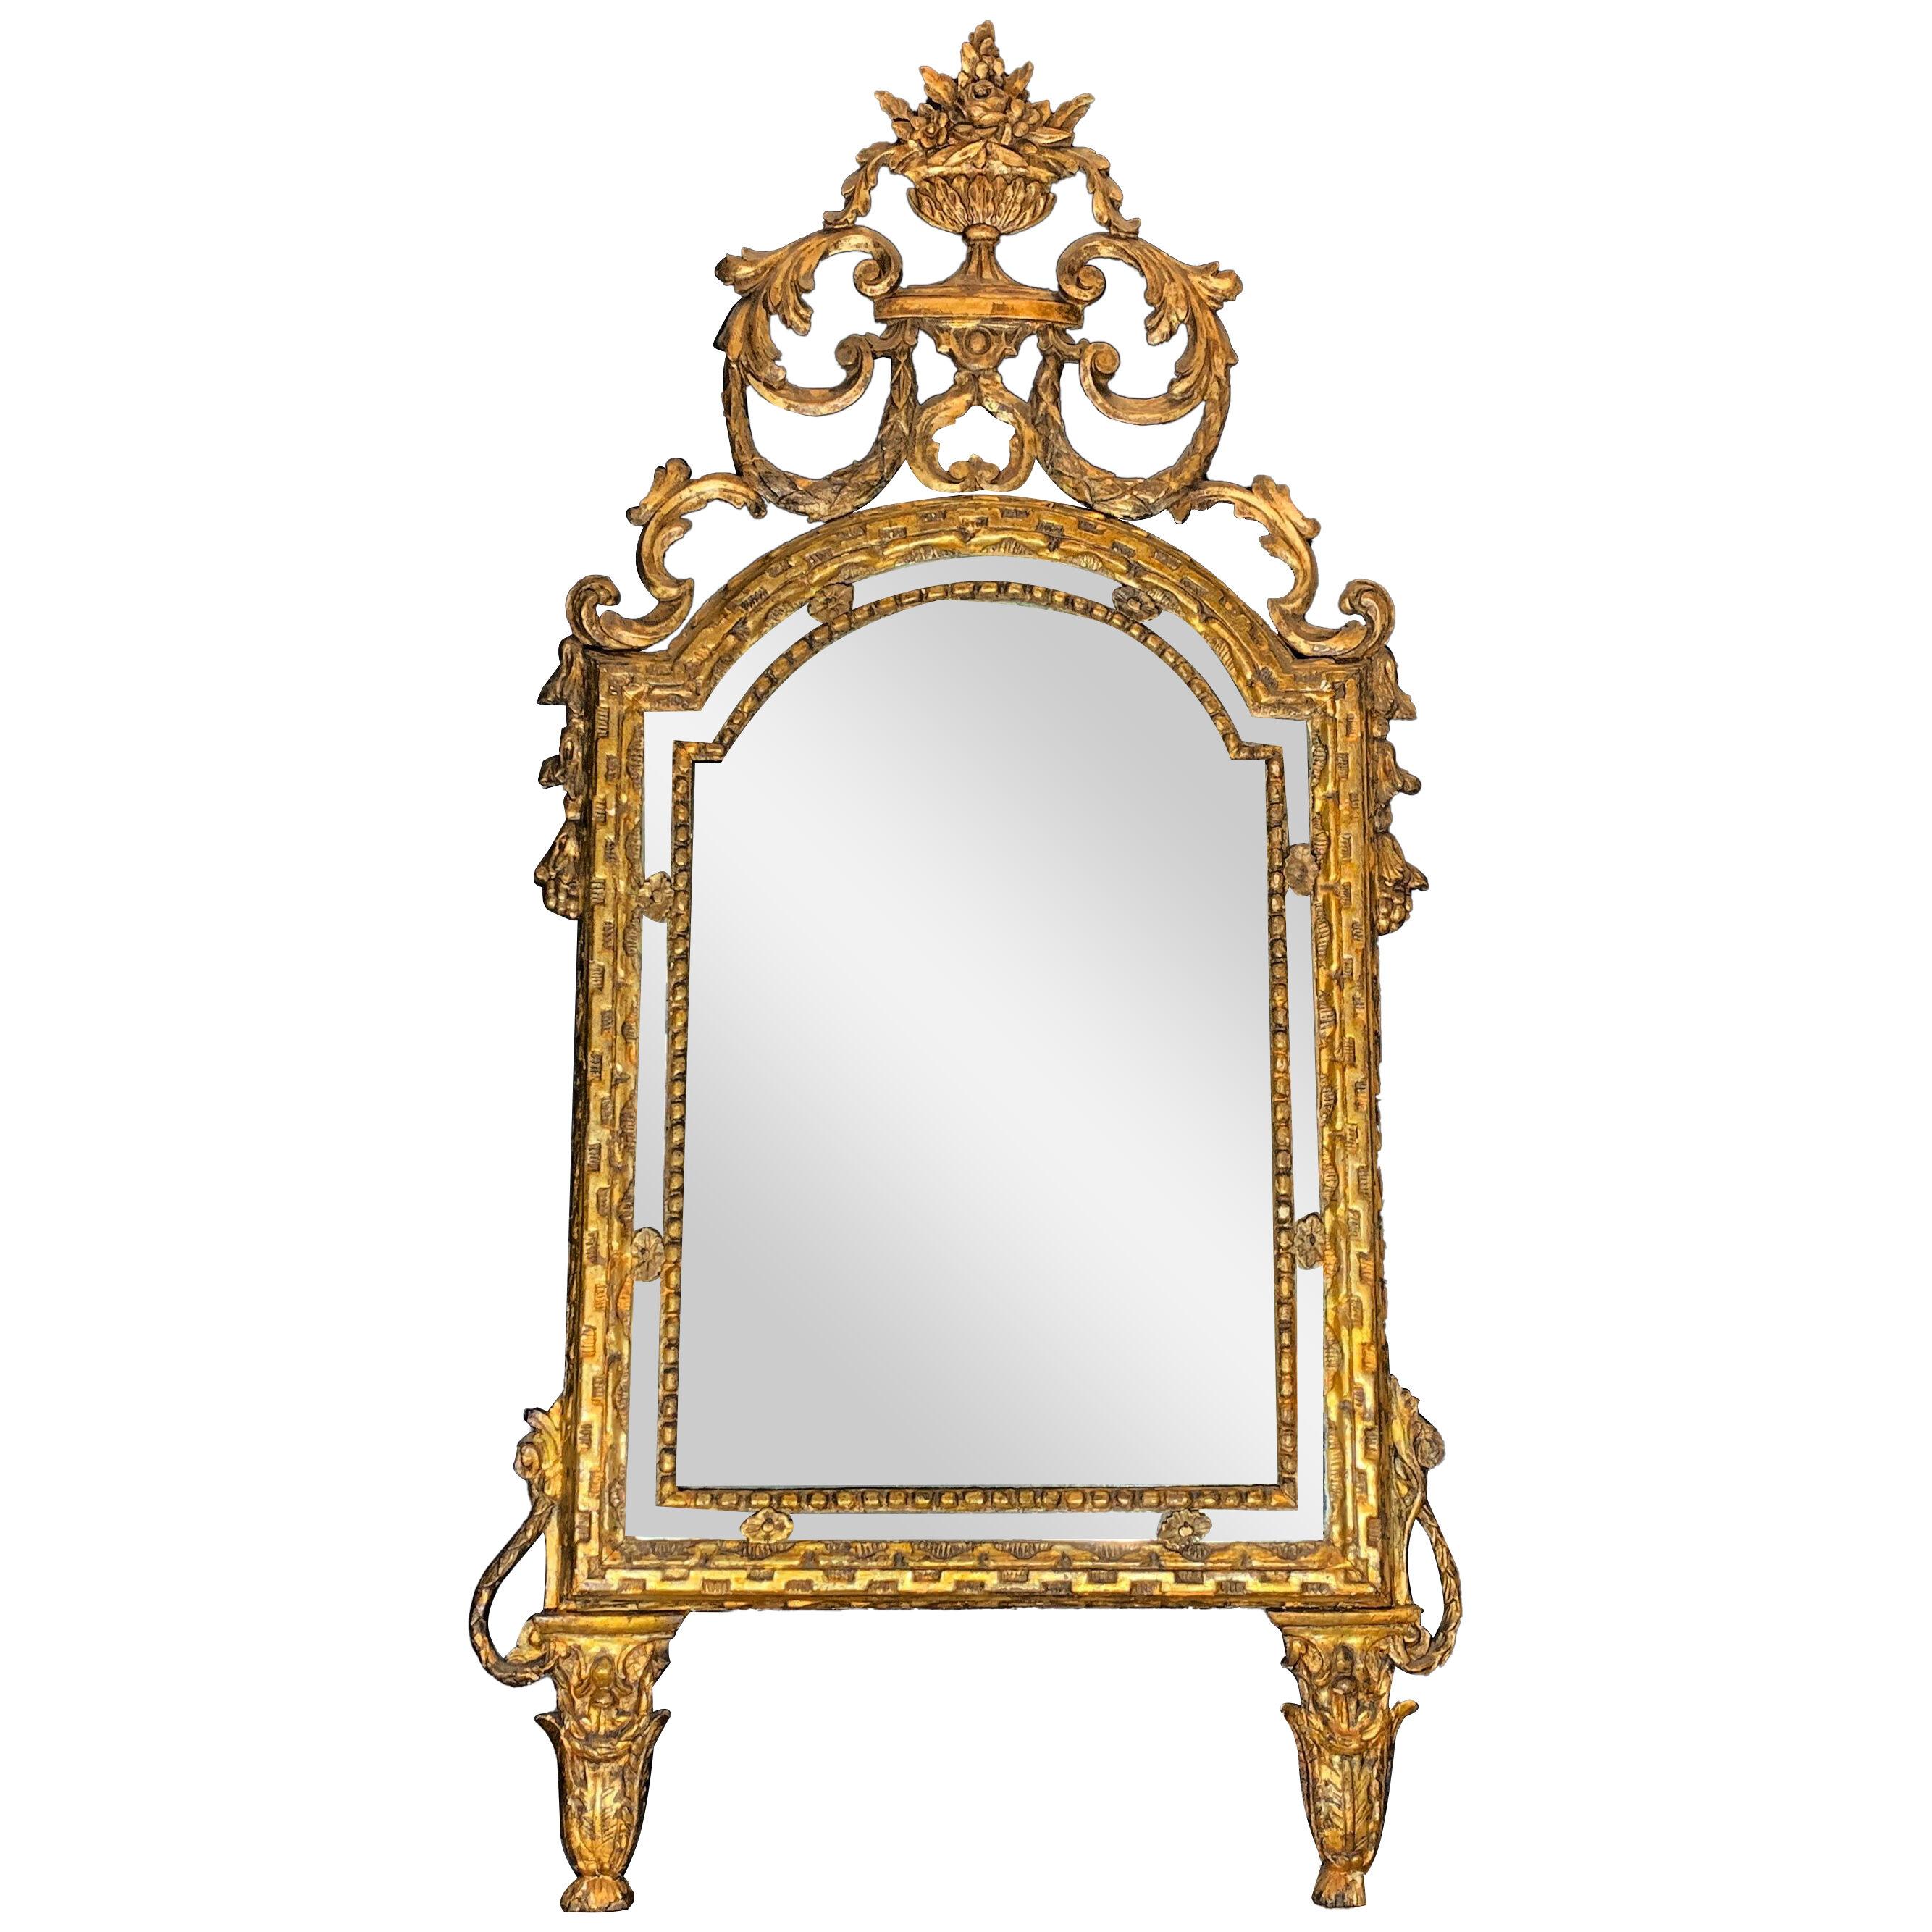  Early 18th Century Italian Mirror